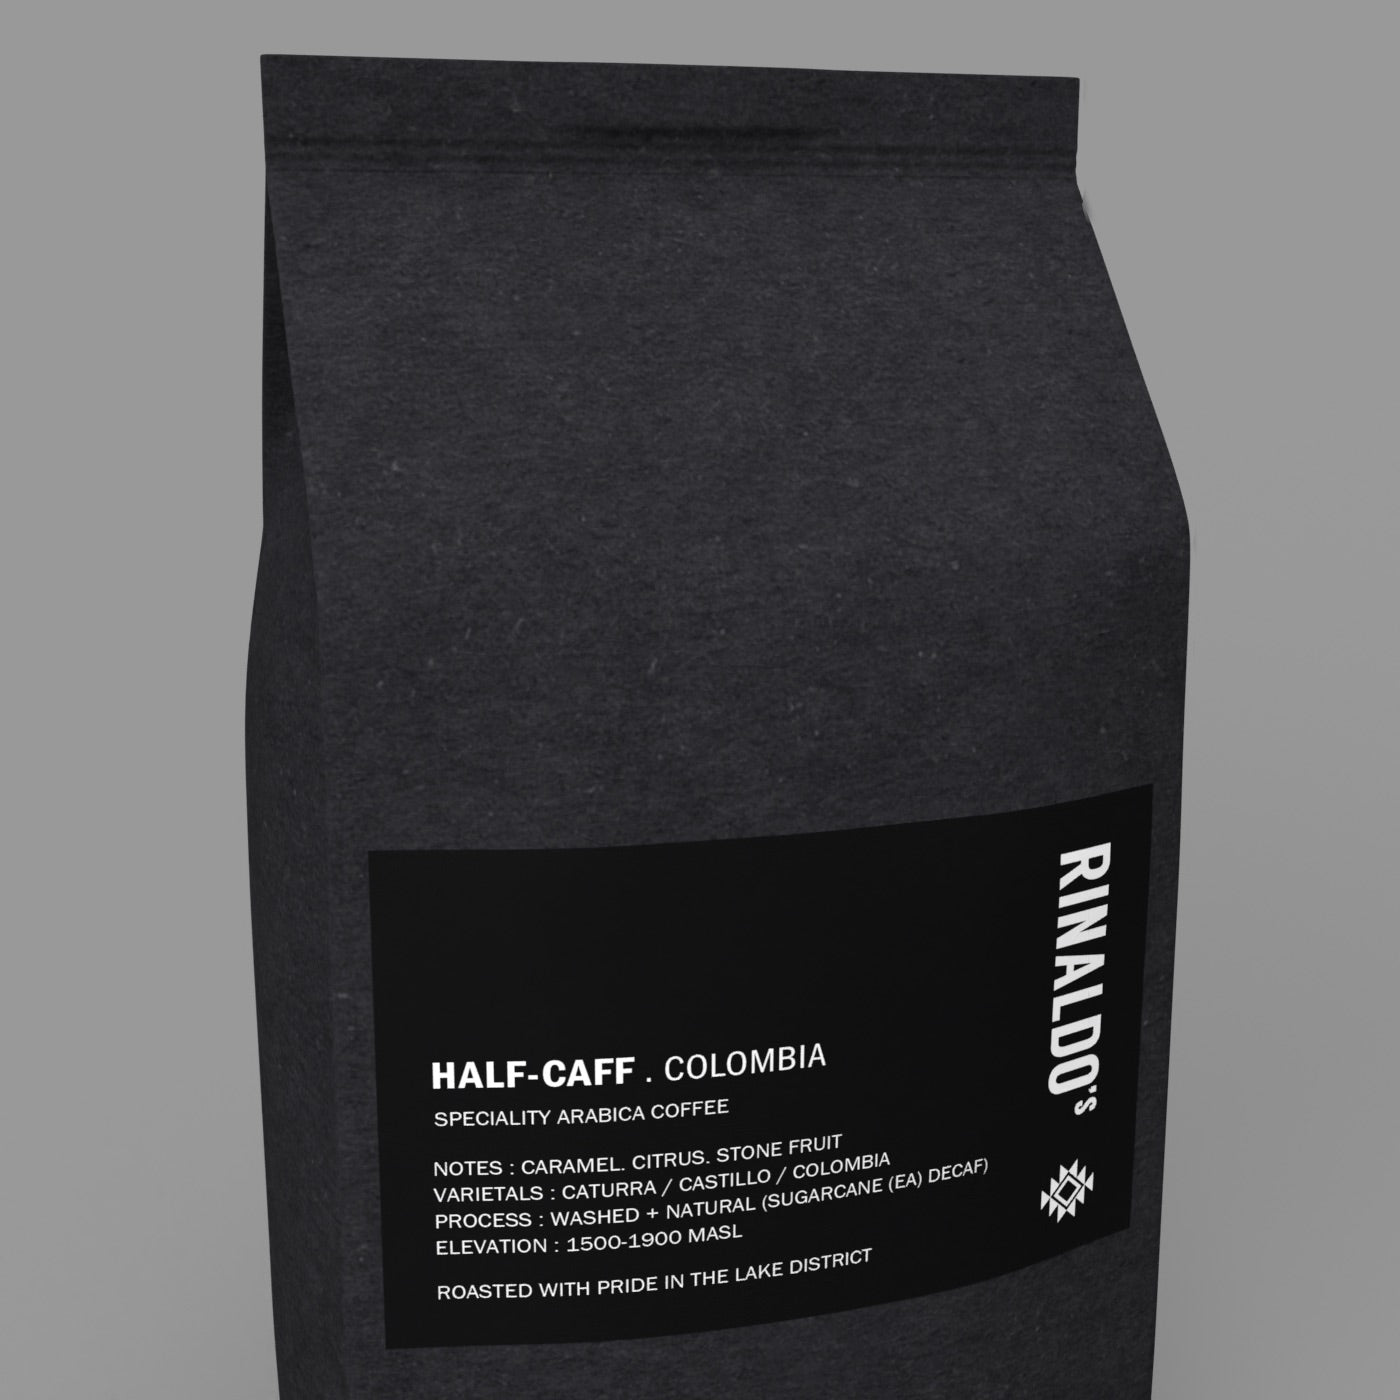 Half-Caff Colombia Coffee - 100% Arabica, Half the Caffeine